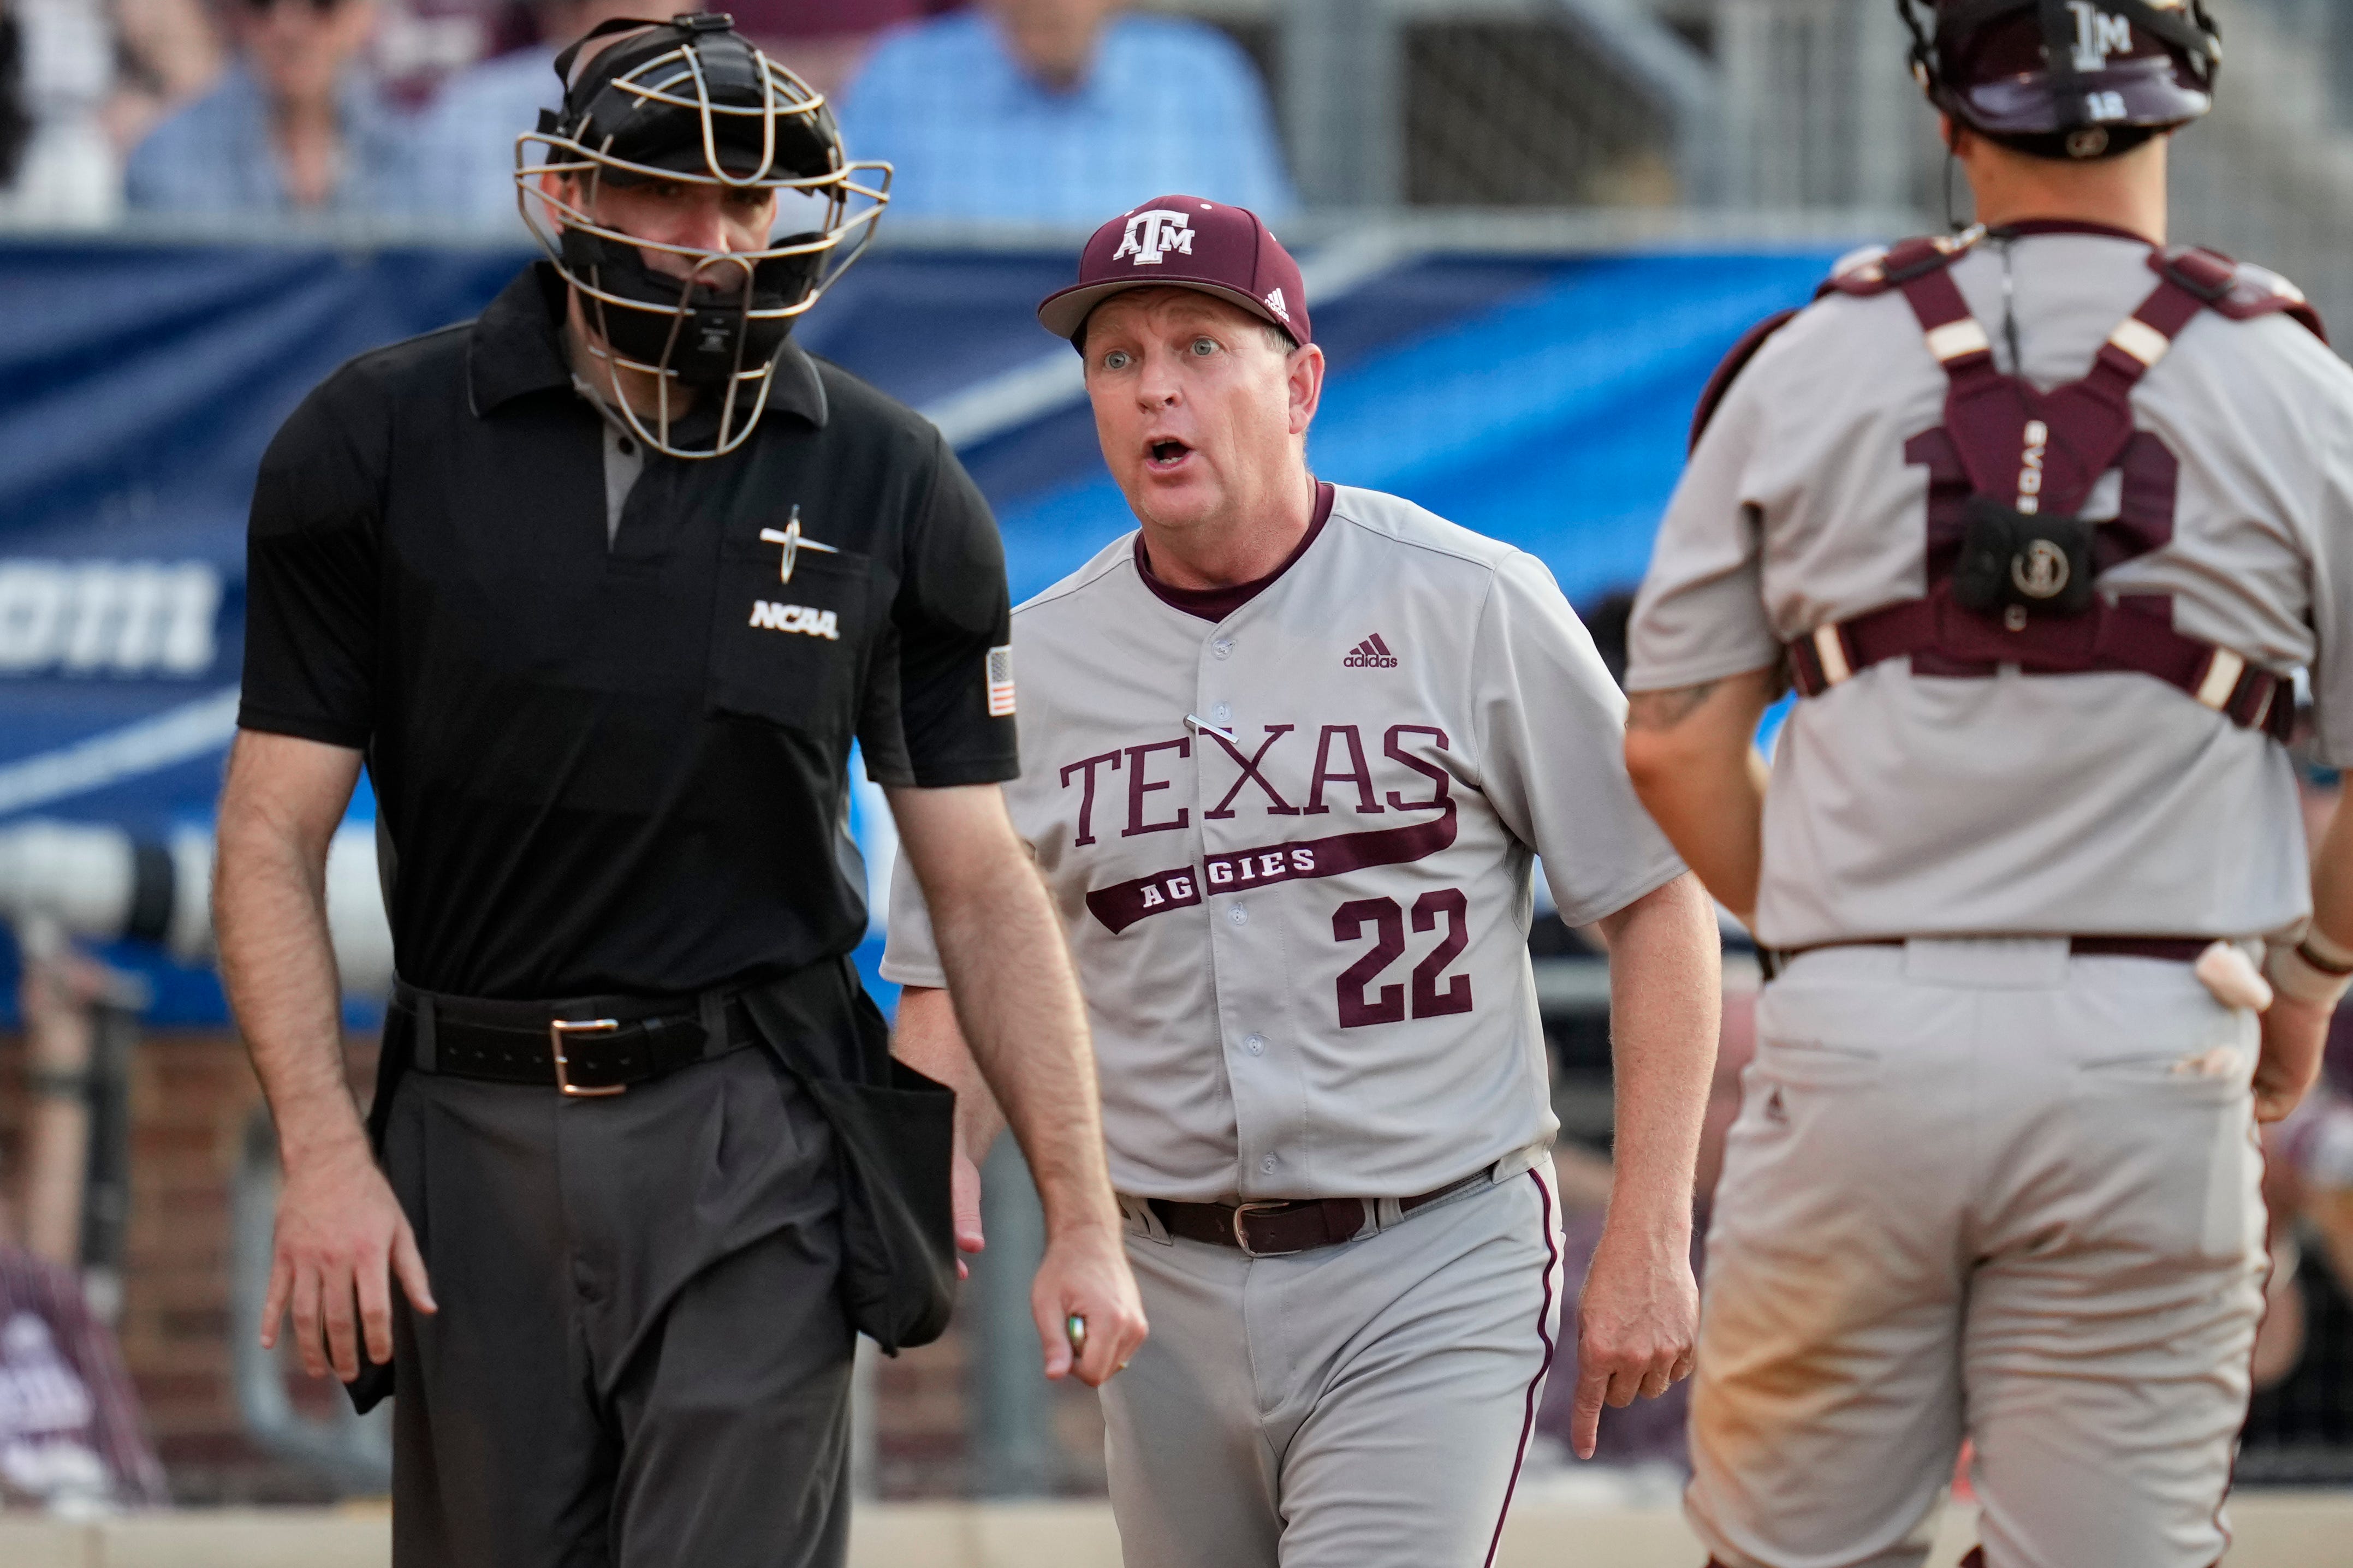 Schlossnagle has quickly transformed Texas A&M into a baseball power